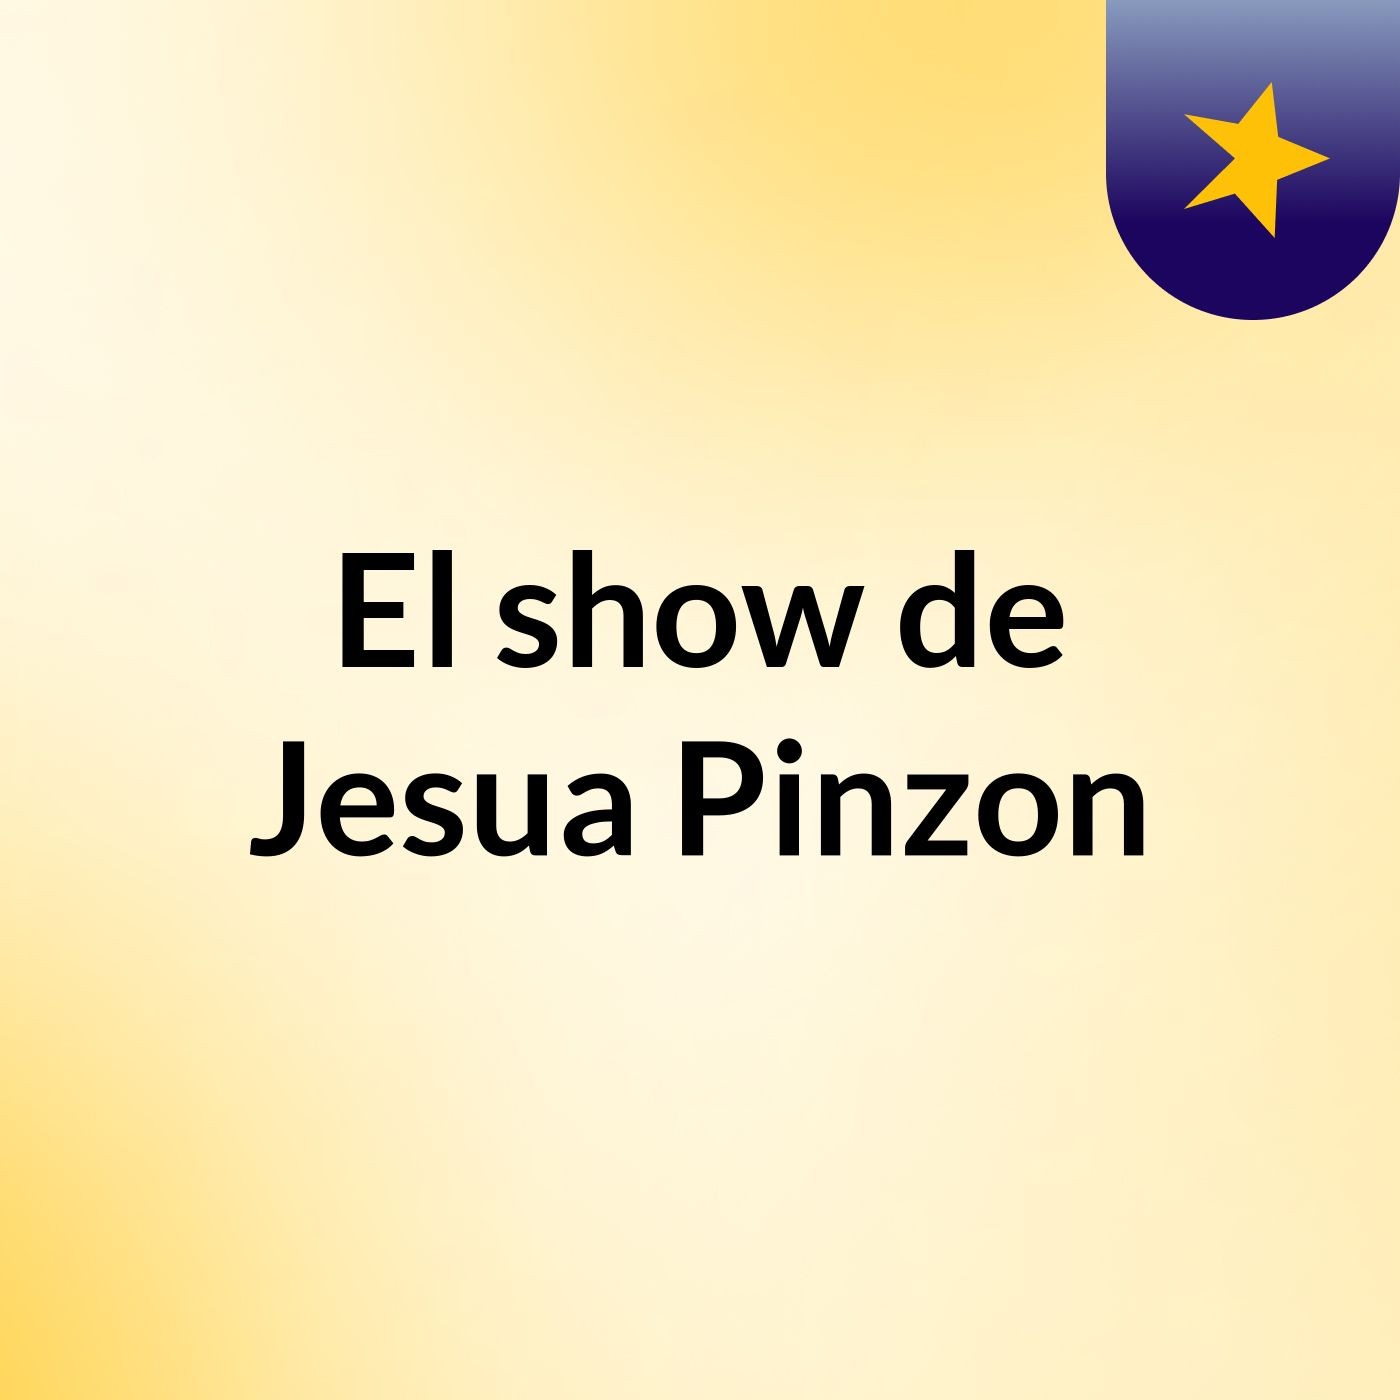 El show de Jesua Pinzon